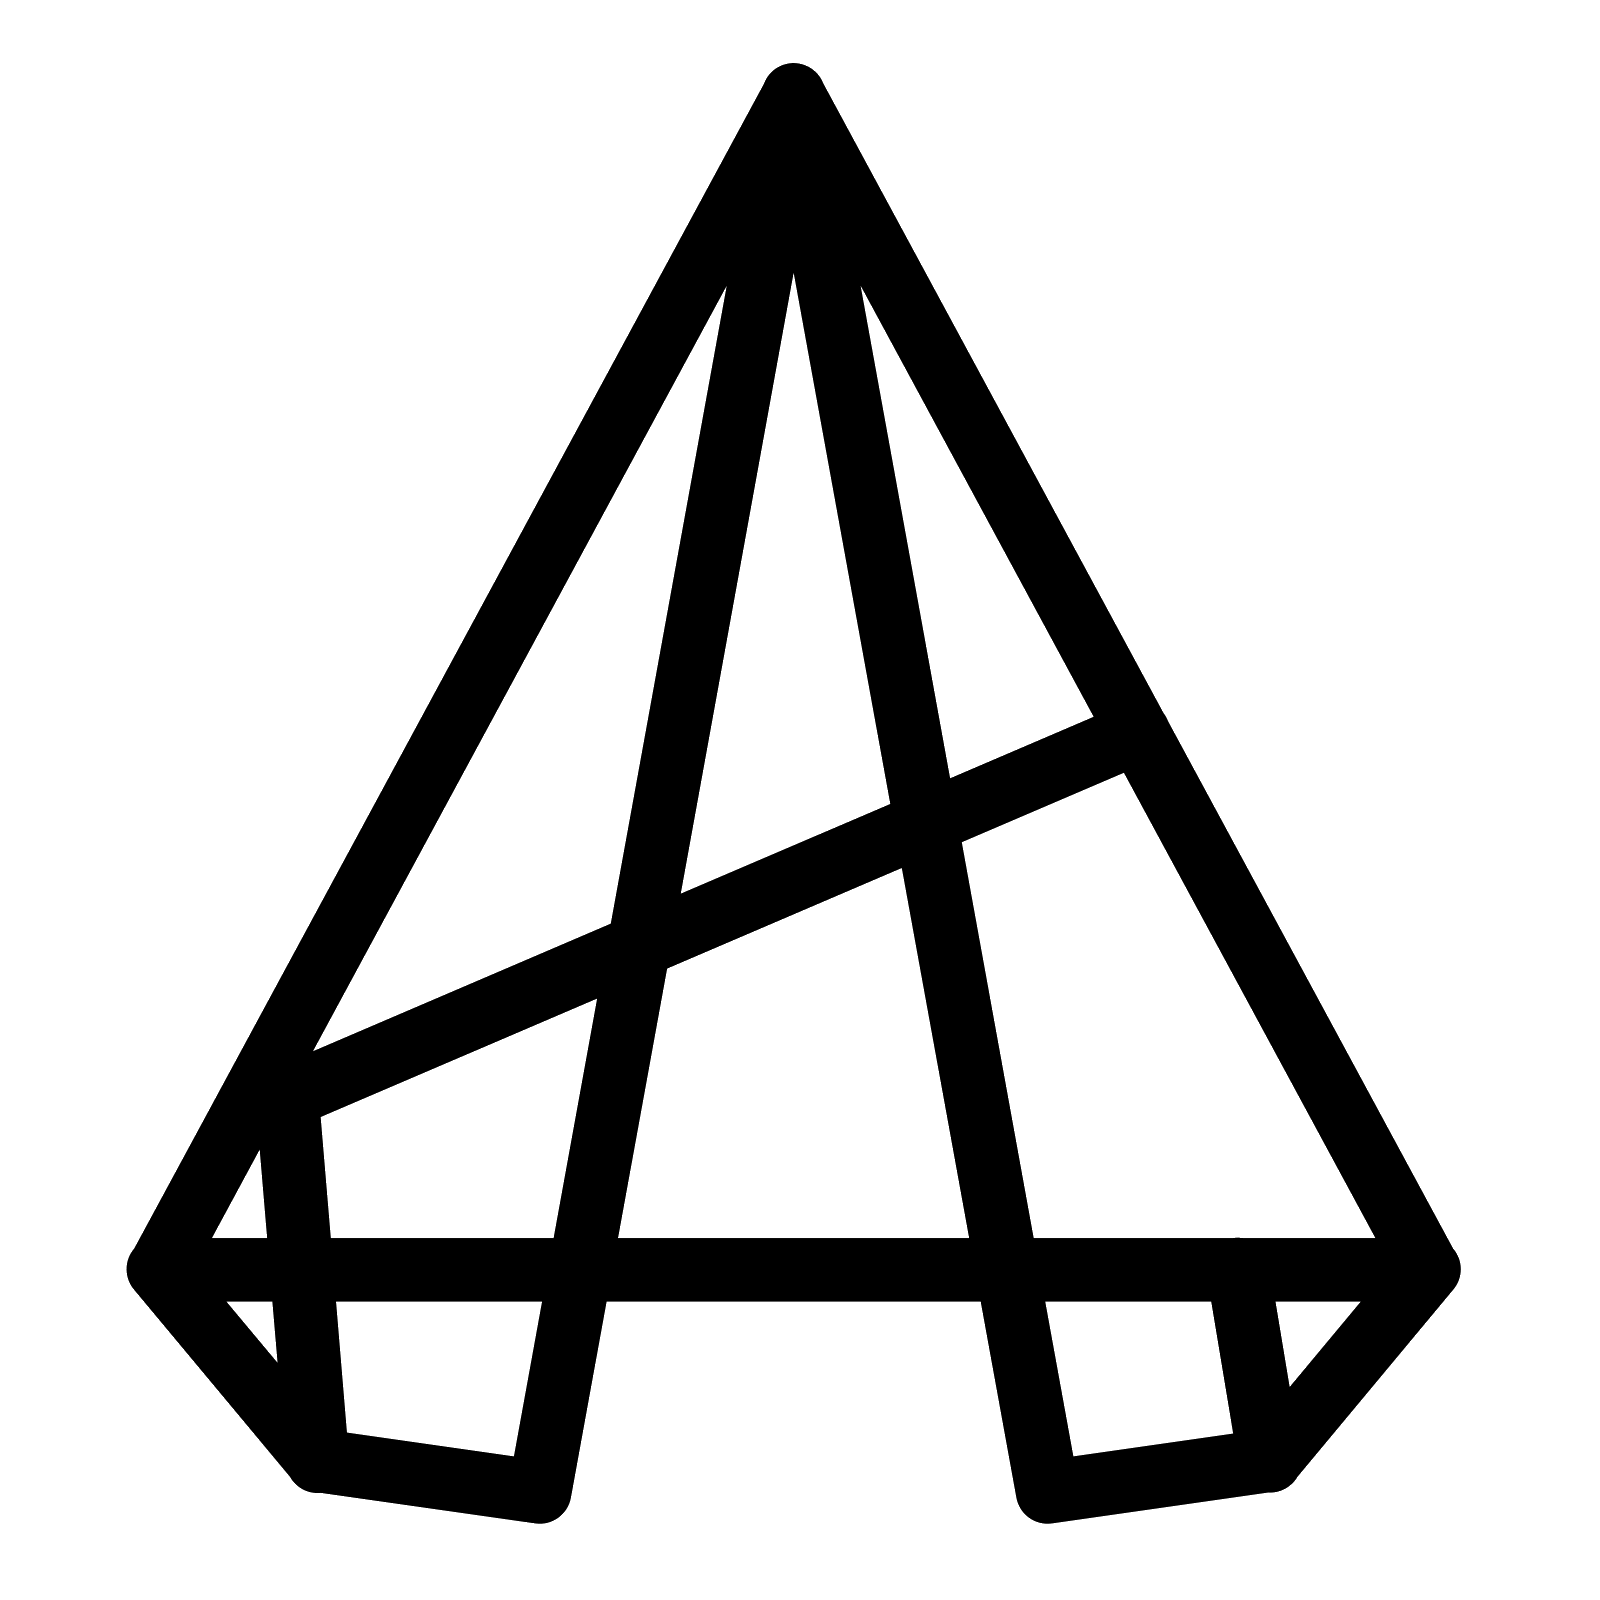 AutoDesk AutoCAD Logo